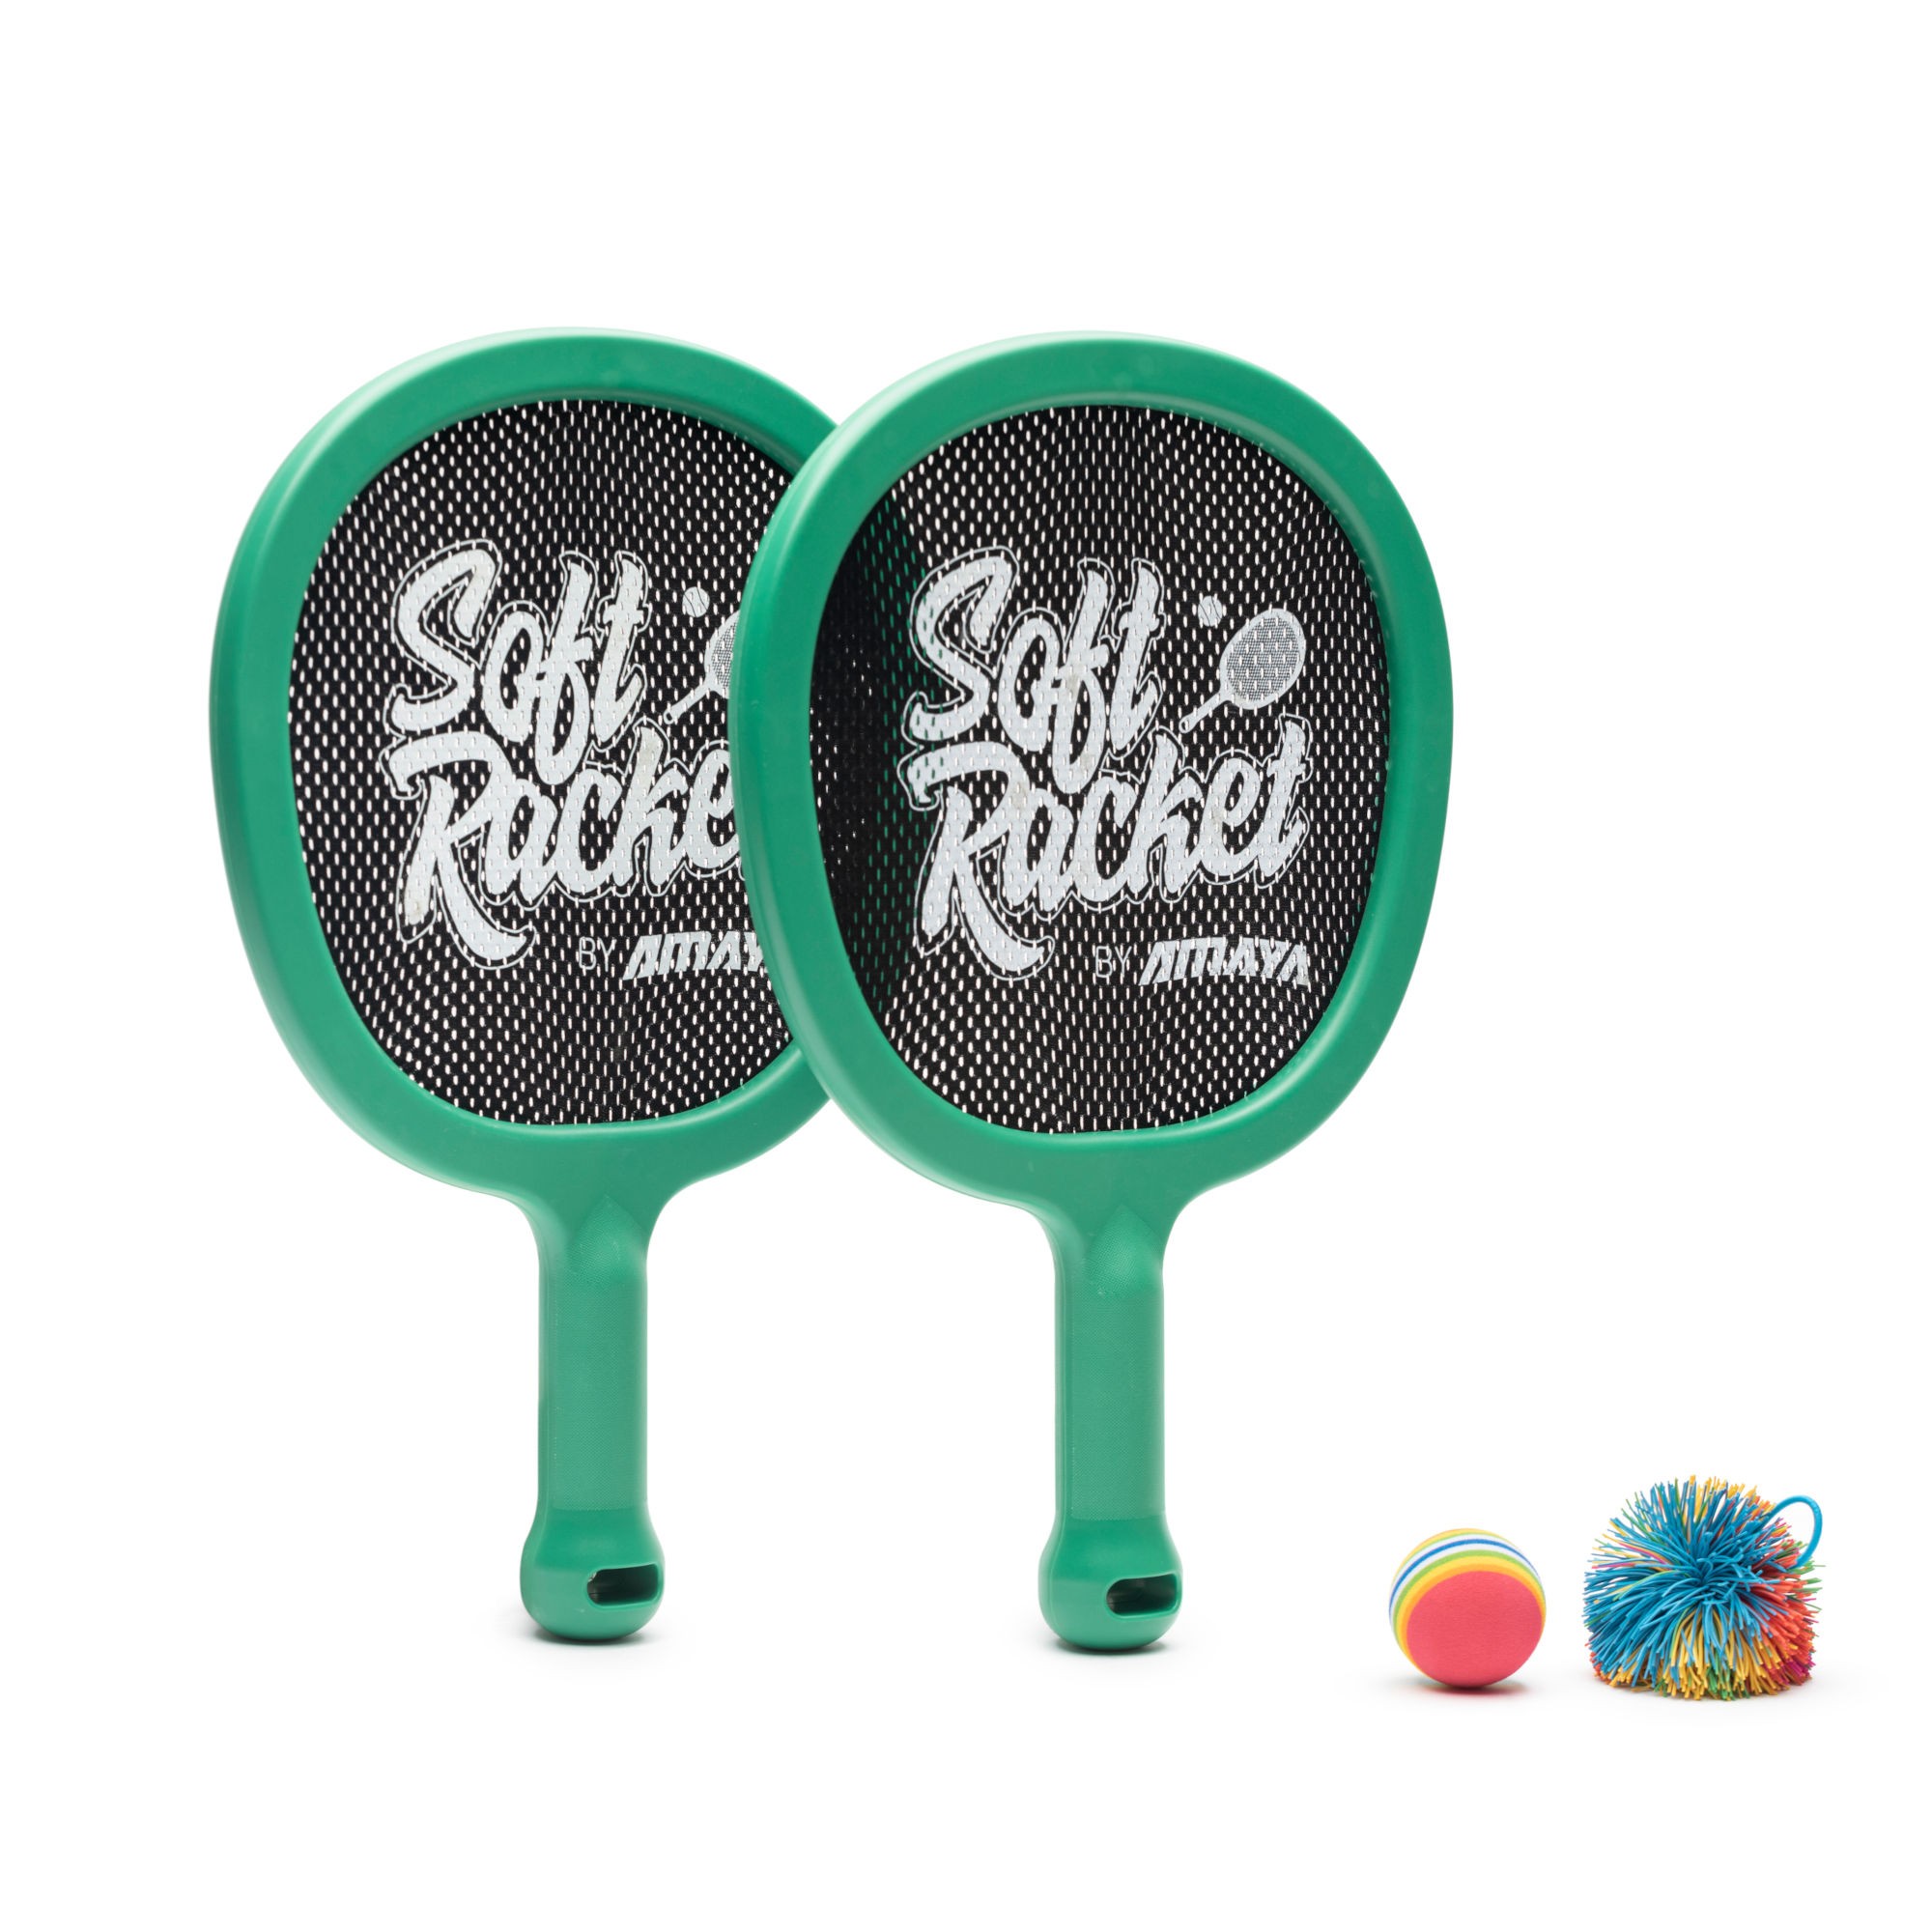 soft-racket-by-amaya-varios-colores